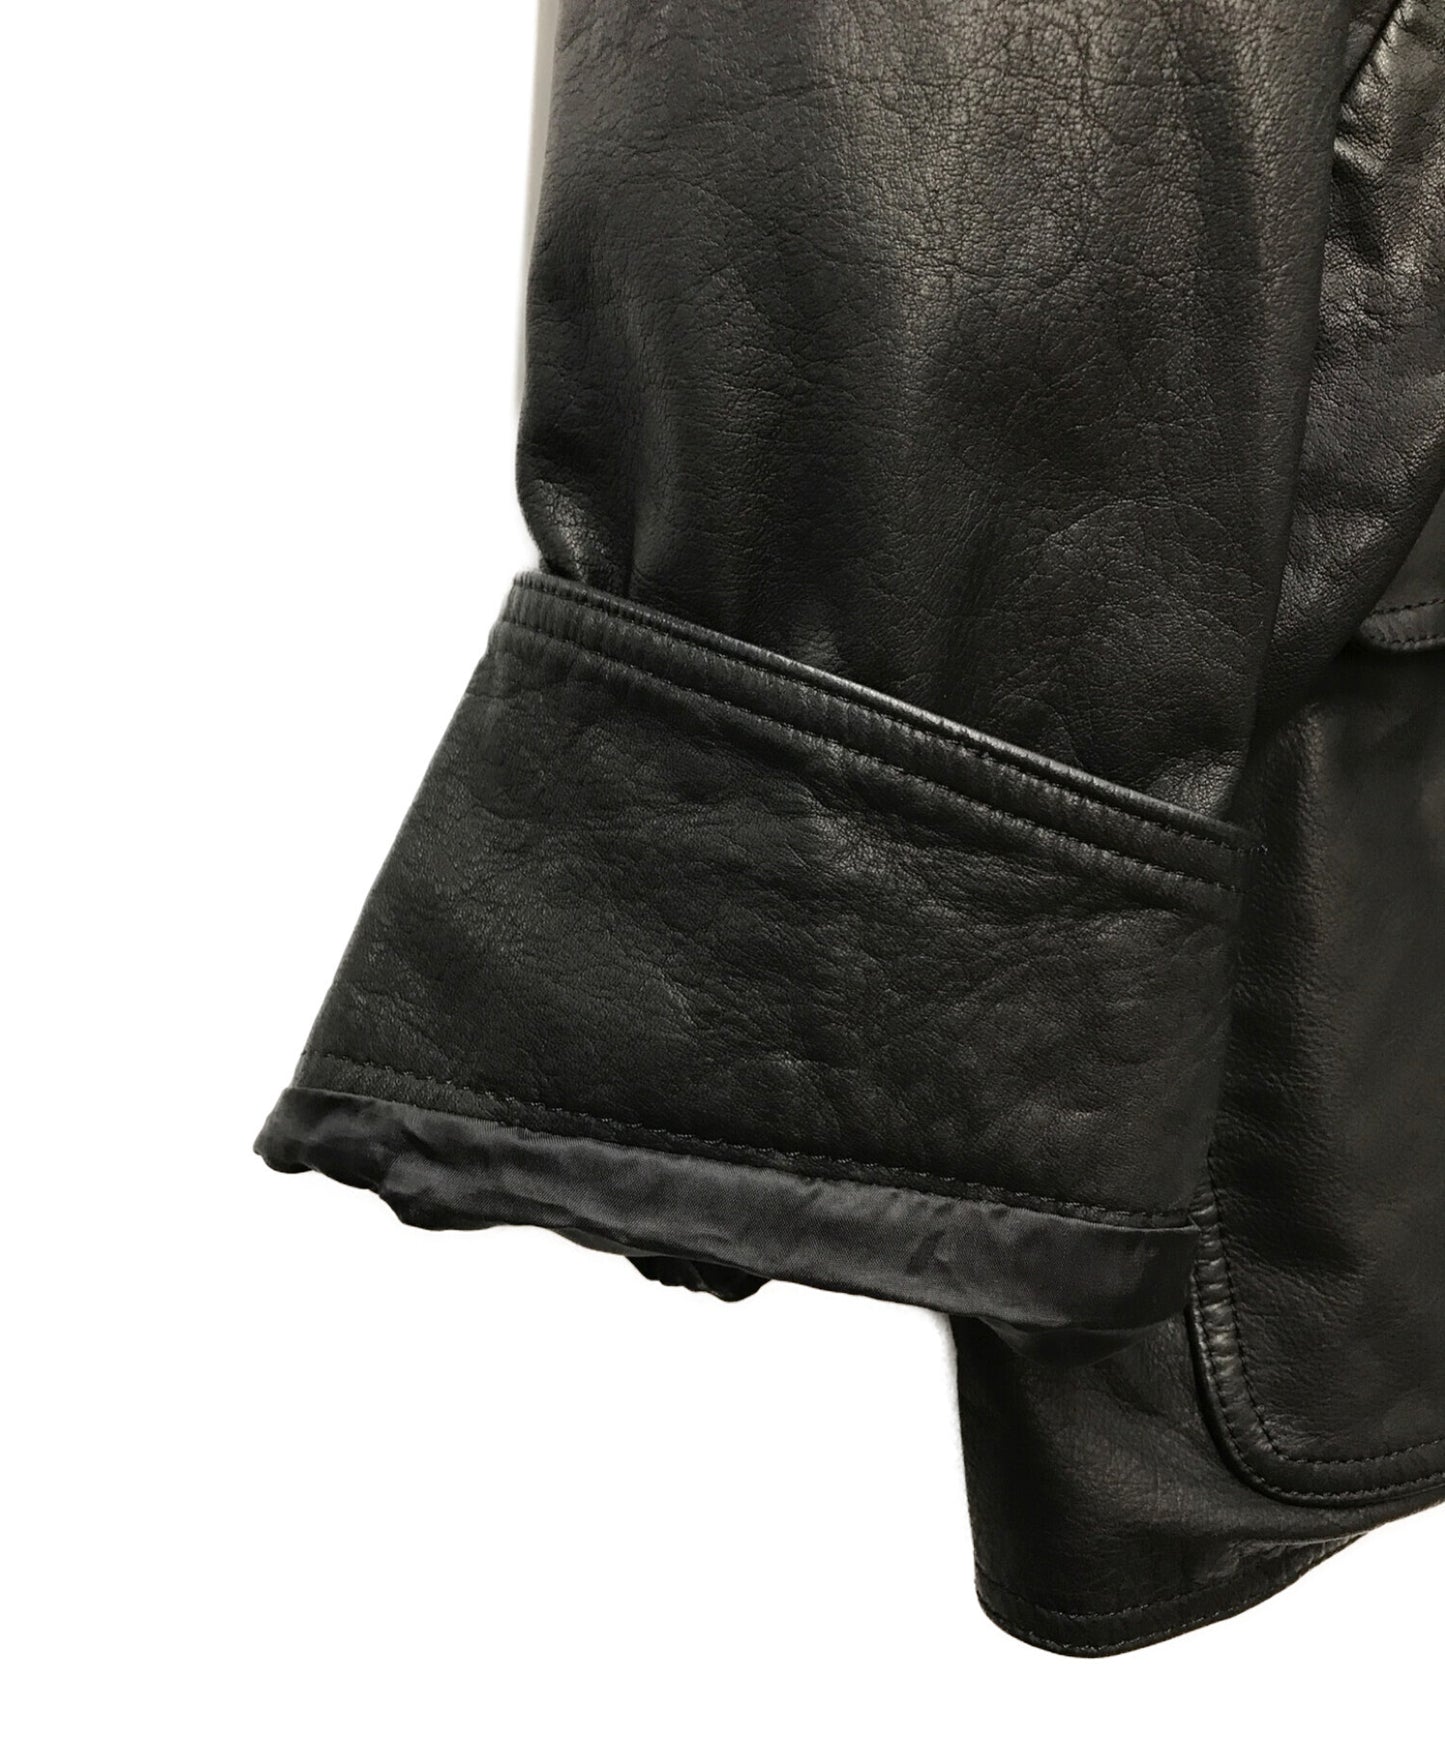 Flagstuff × Blackmeans Jacket หนังวัว 21AW-FS-01